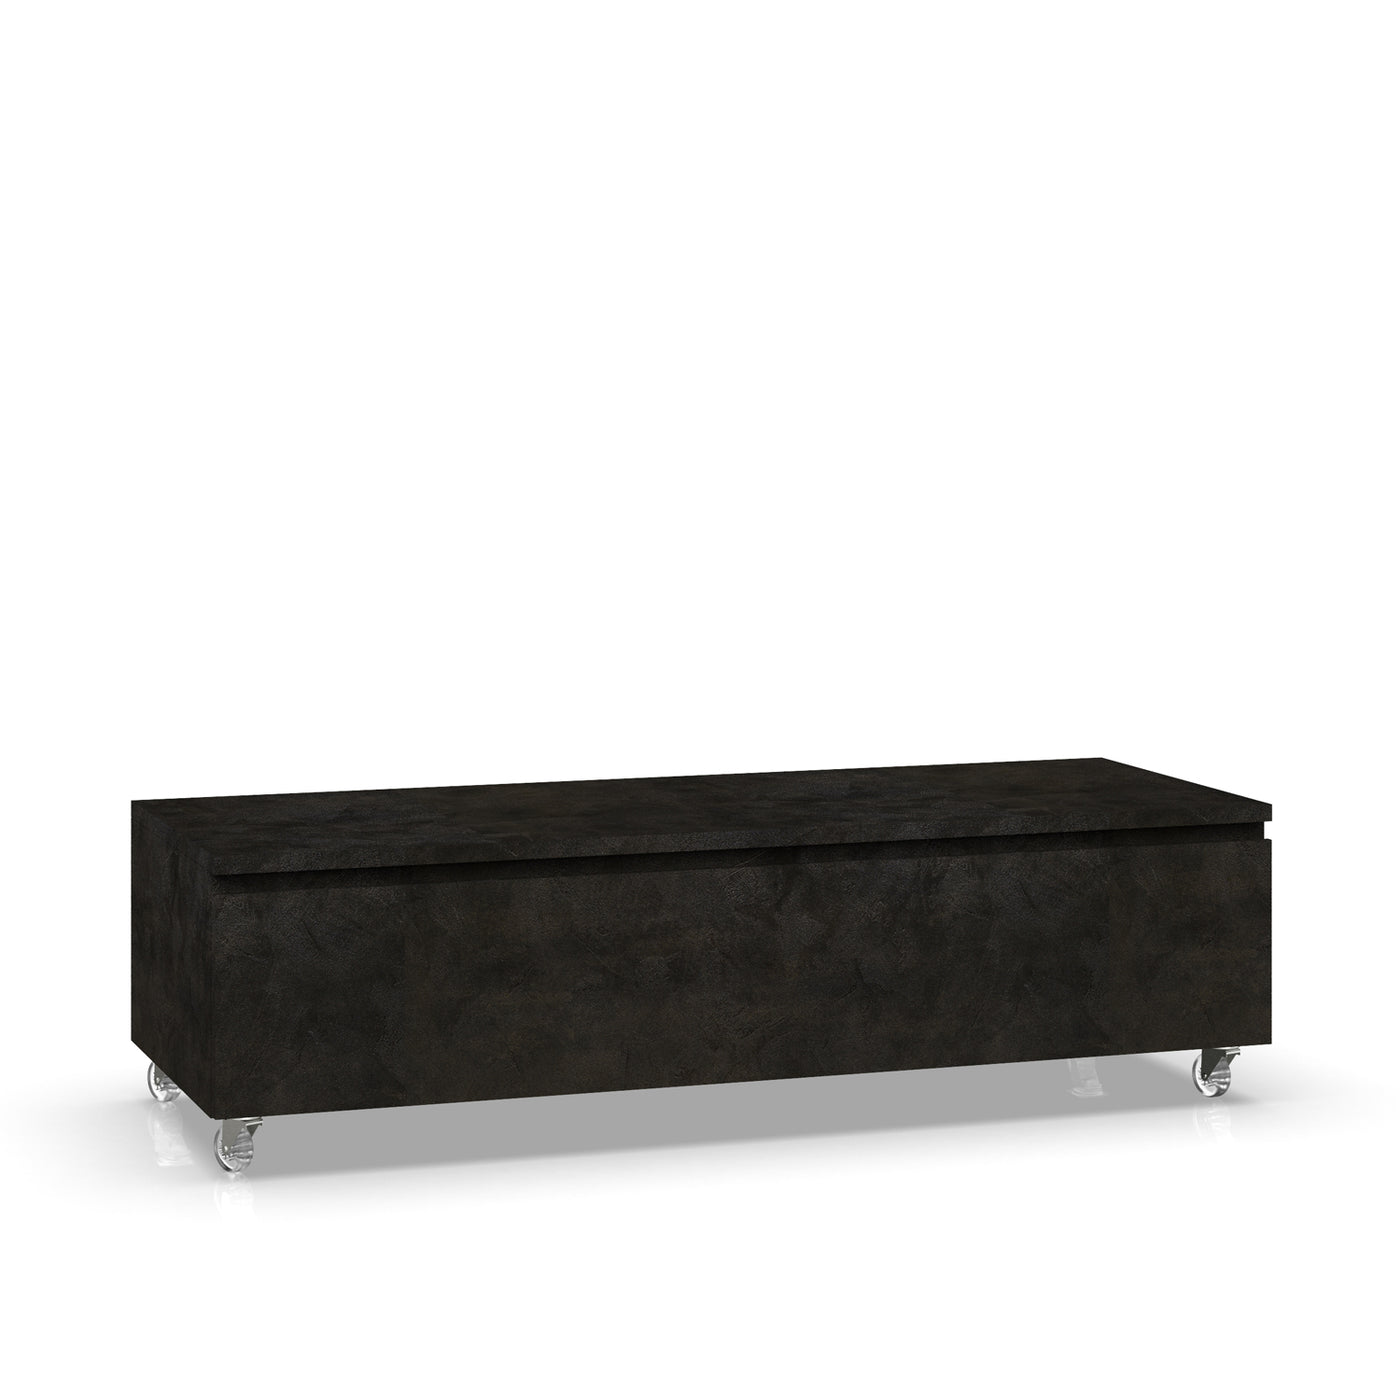 YOKA stone gray chest of drawers 120 cm